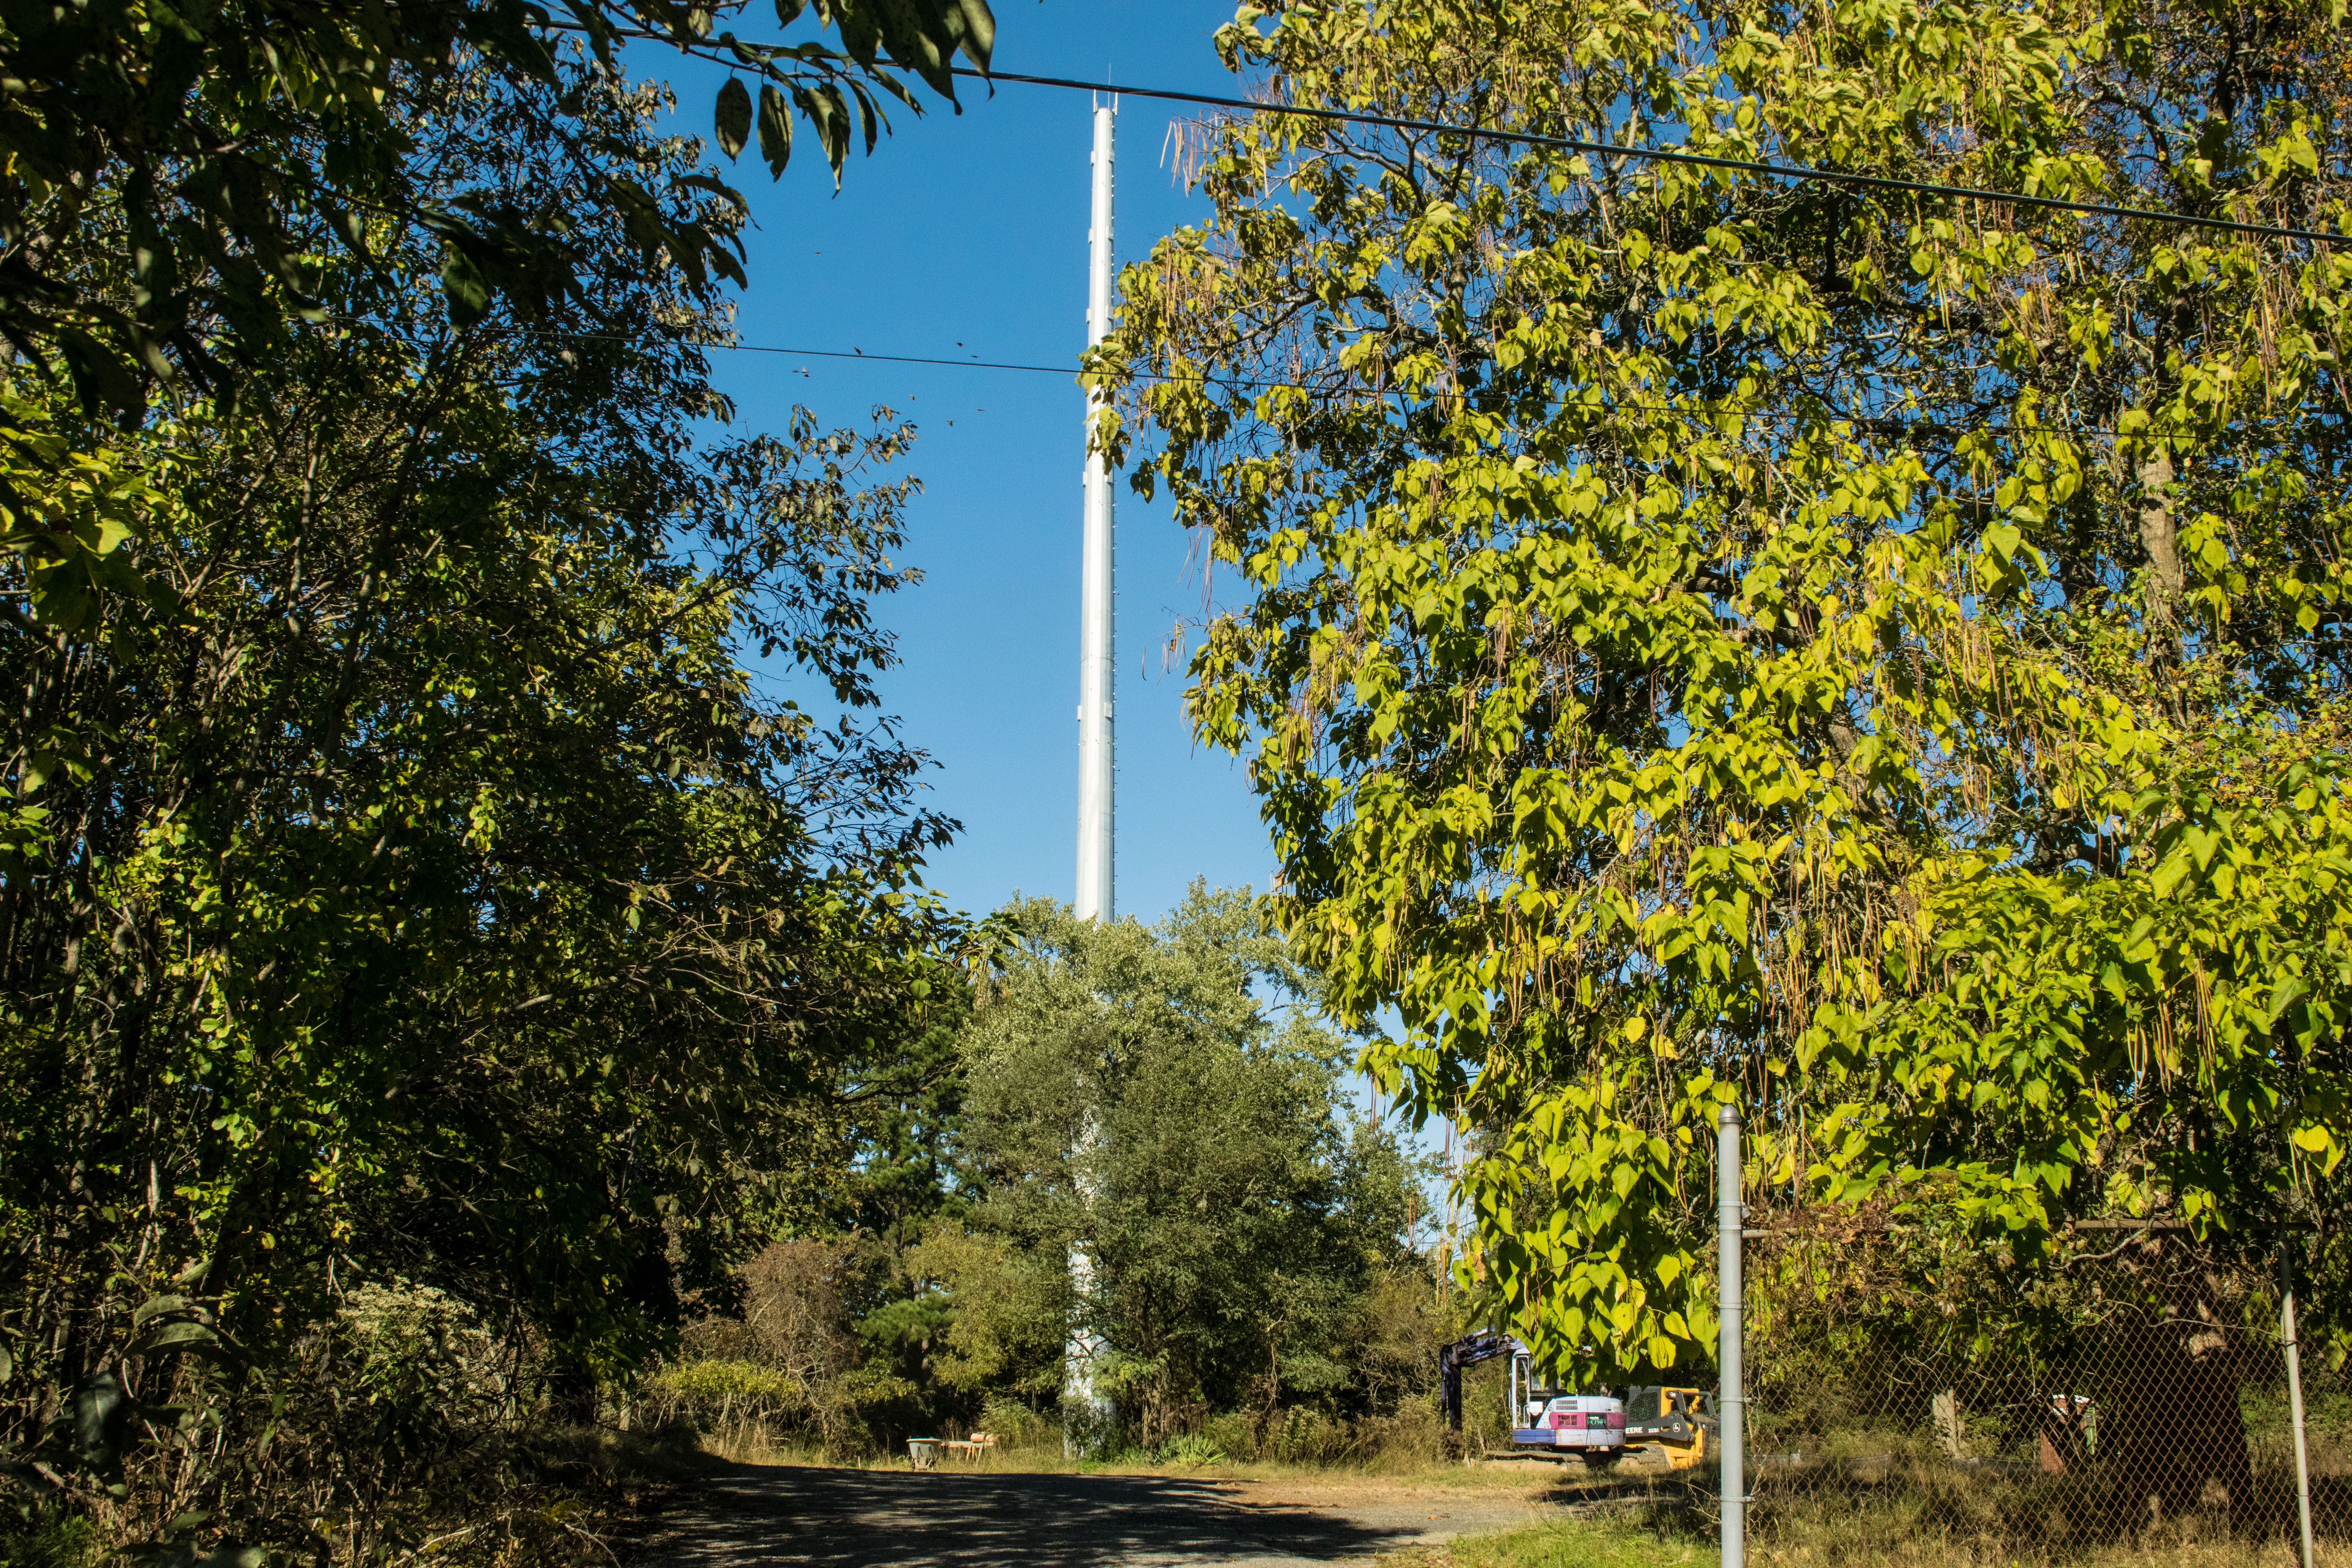 A communications tower along Herbertsville Road in Brick. (Photo: Daniel Nee)